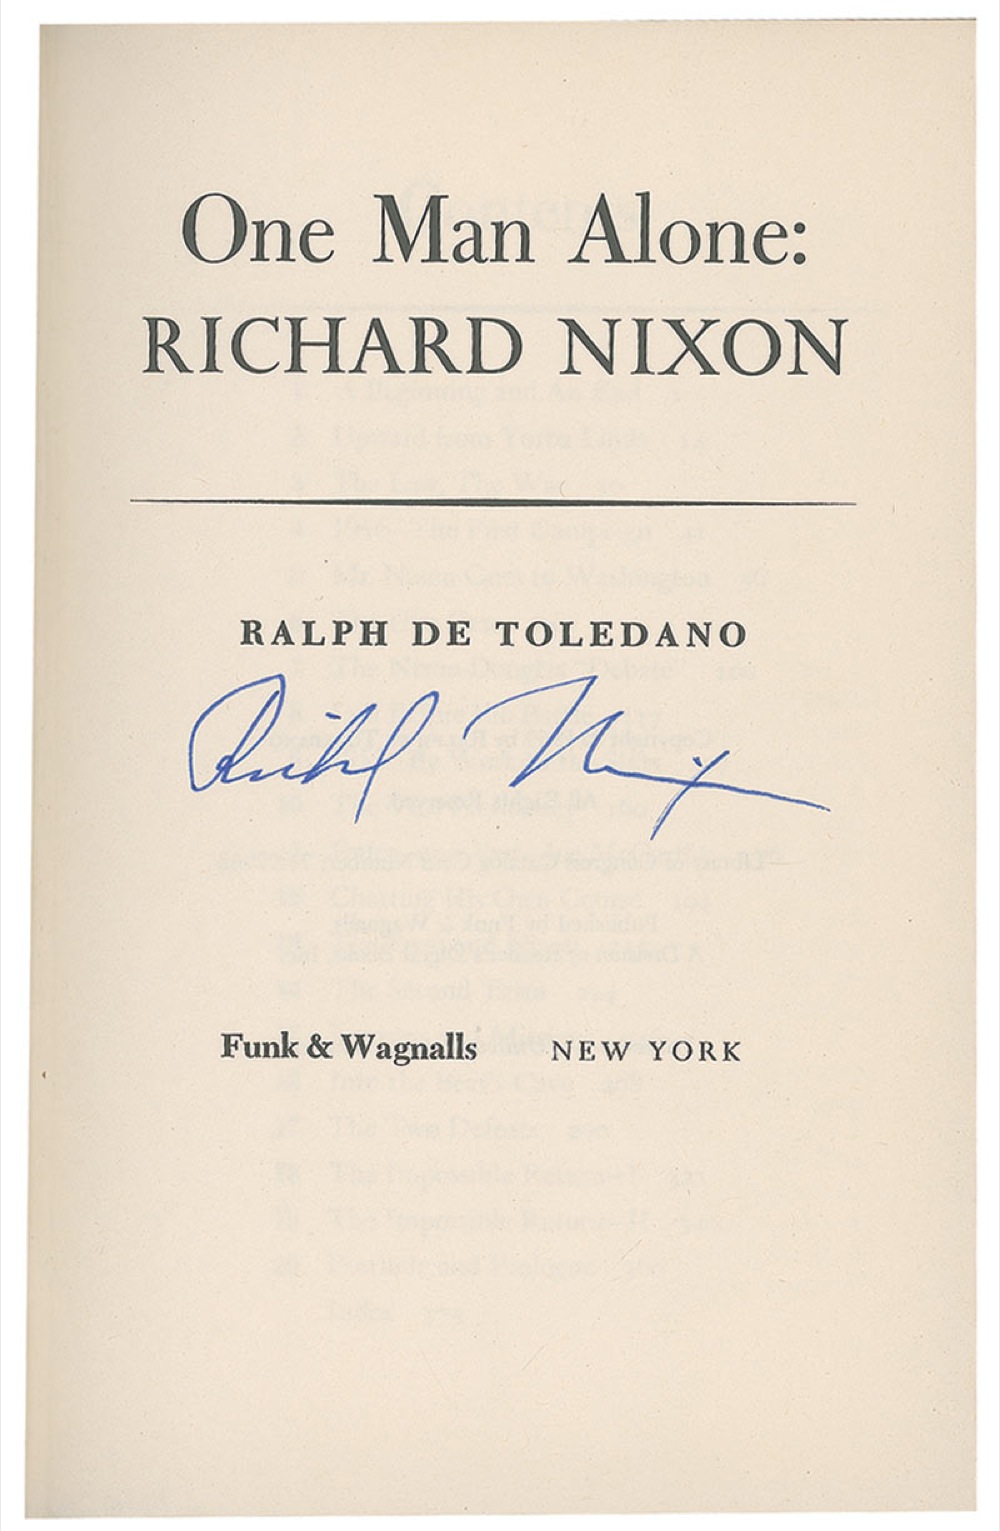 Lot #103 Richard Nixon